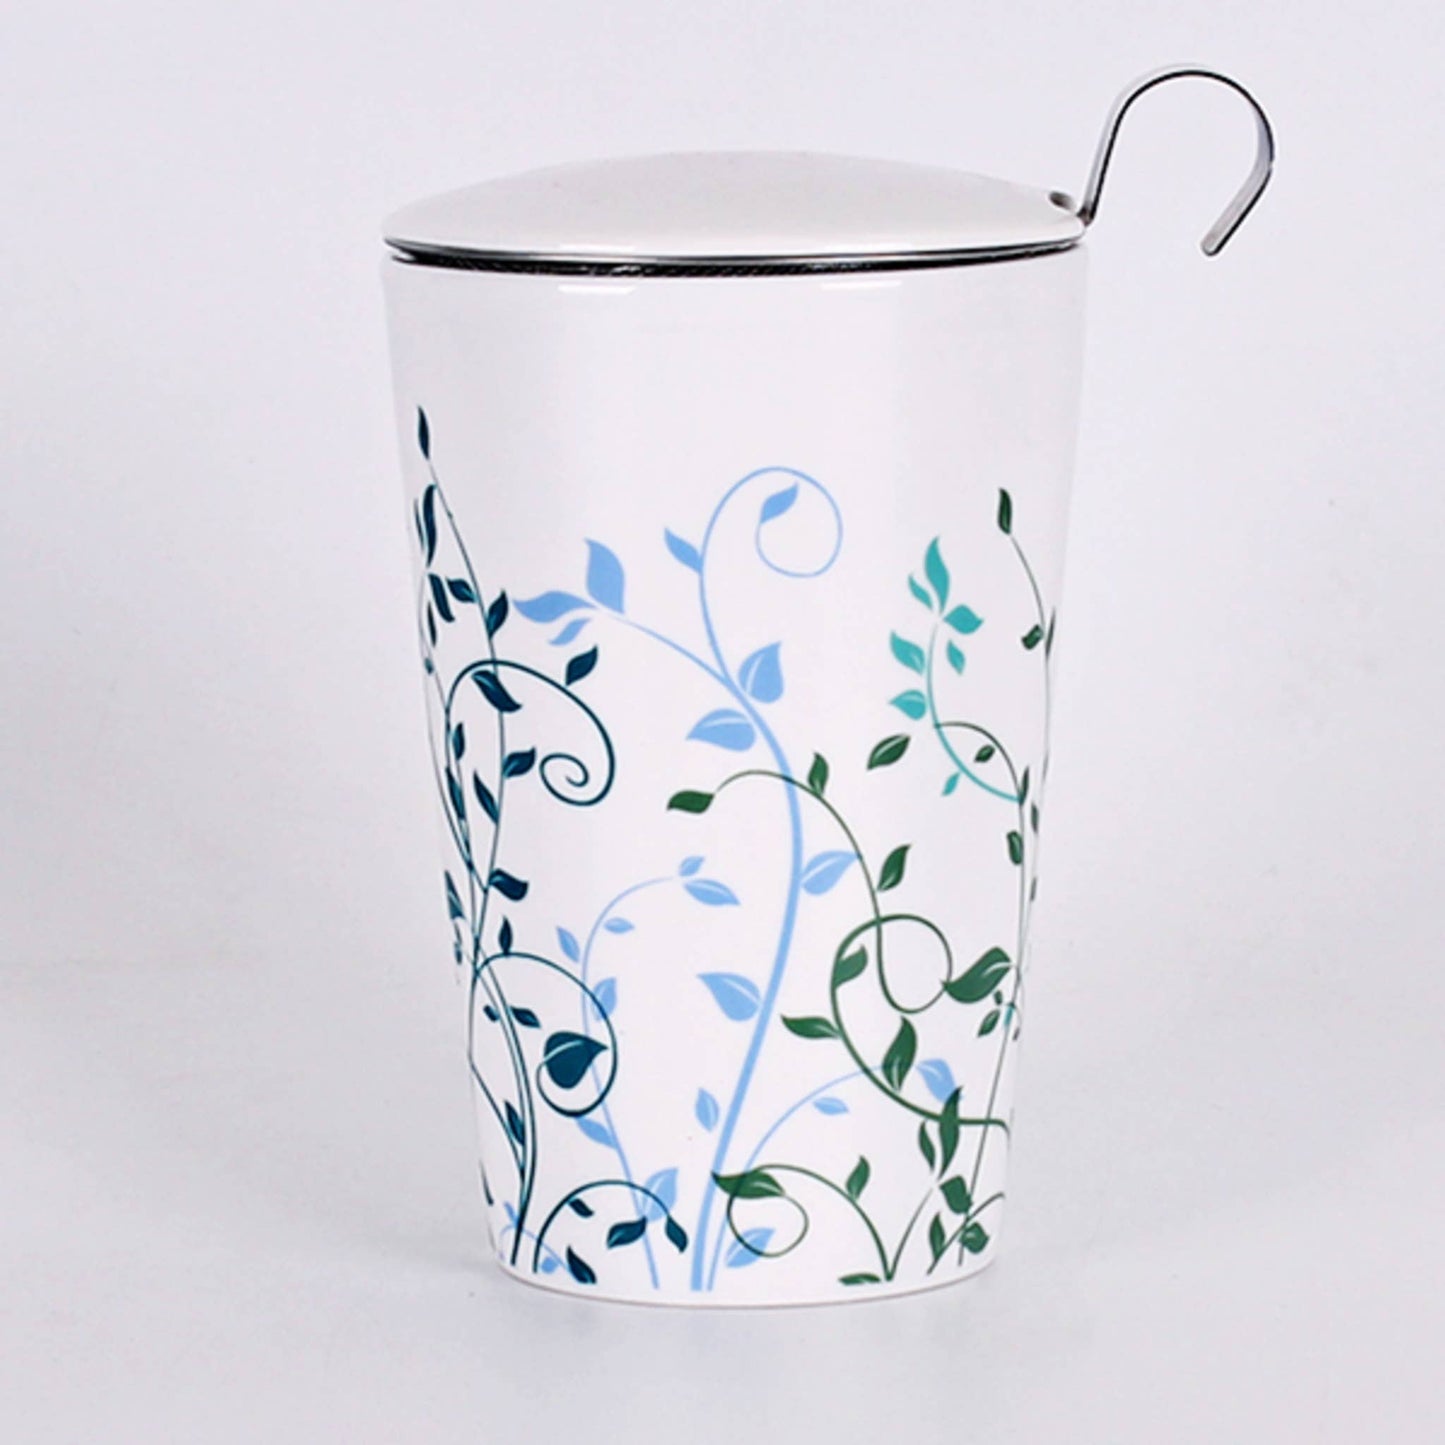 12oz Double Wall Ceramic Tea mug with Lid & Infuser